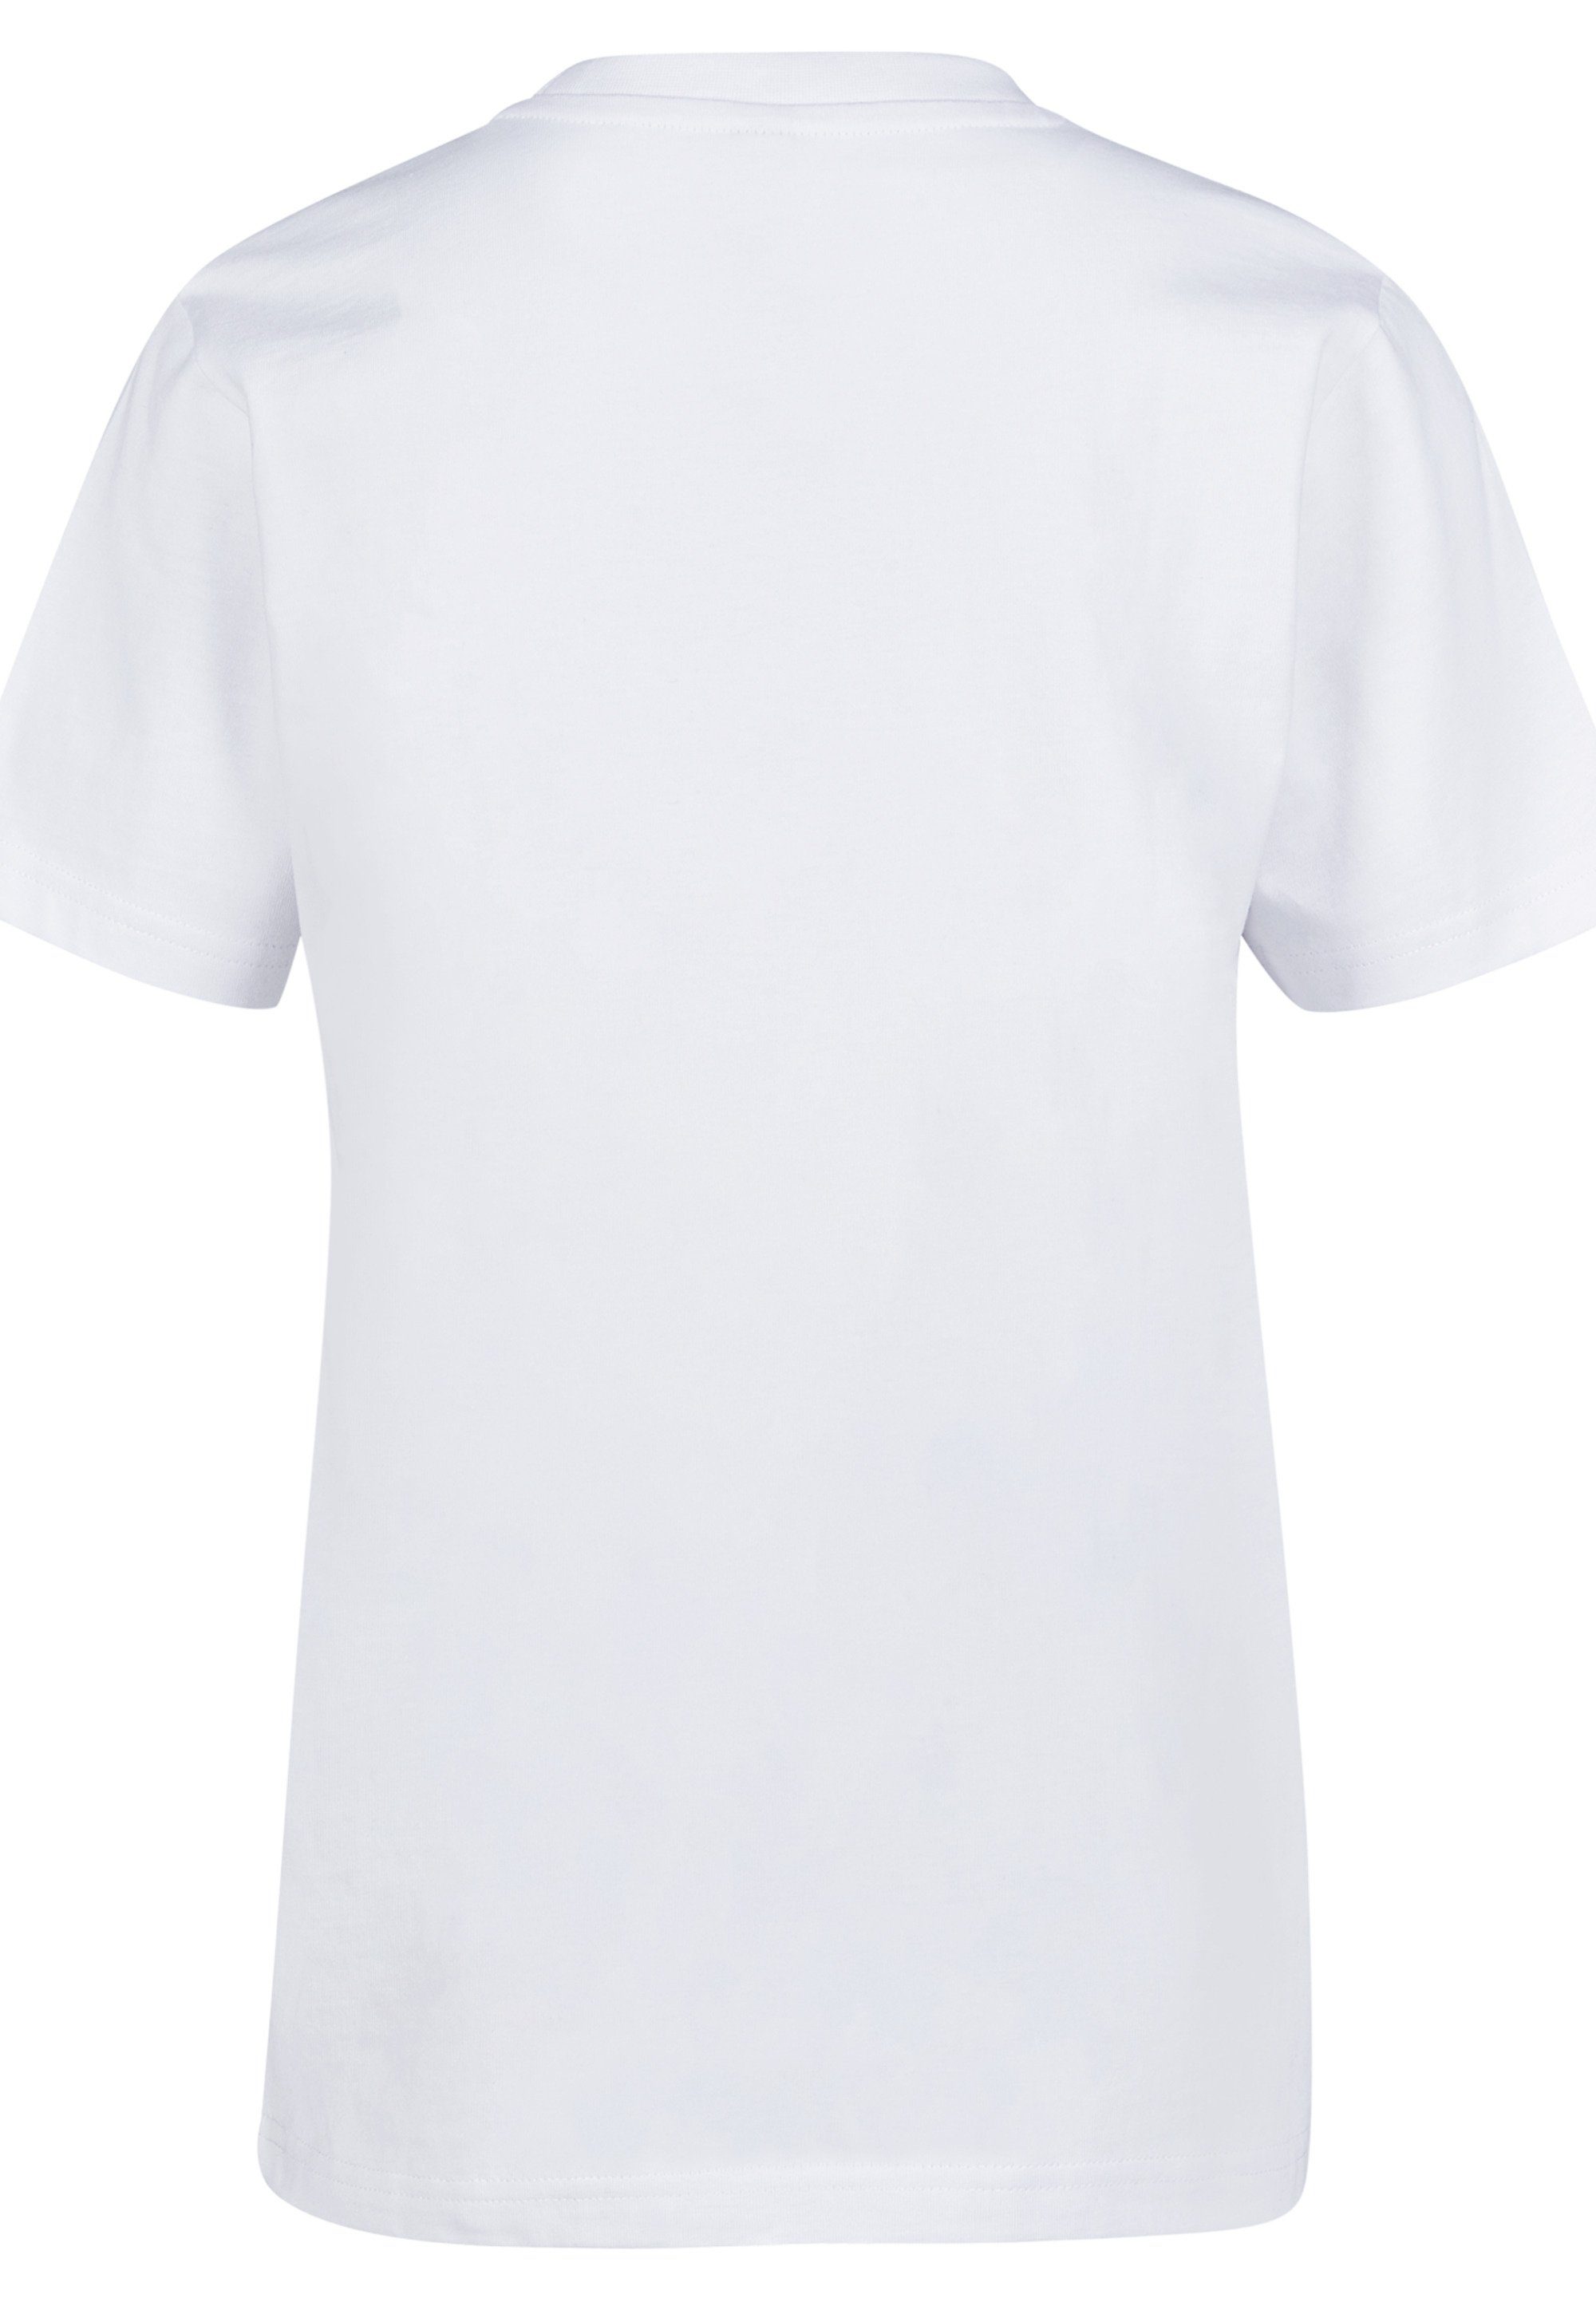 F4NT4STIC T-Shirt NASA Aeronautics Unisex Kinder,Premium Space And Merch,Jungen,Mädchen,Bedruckt